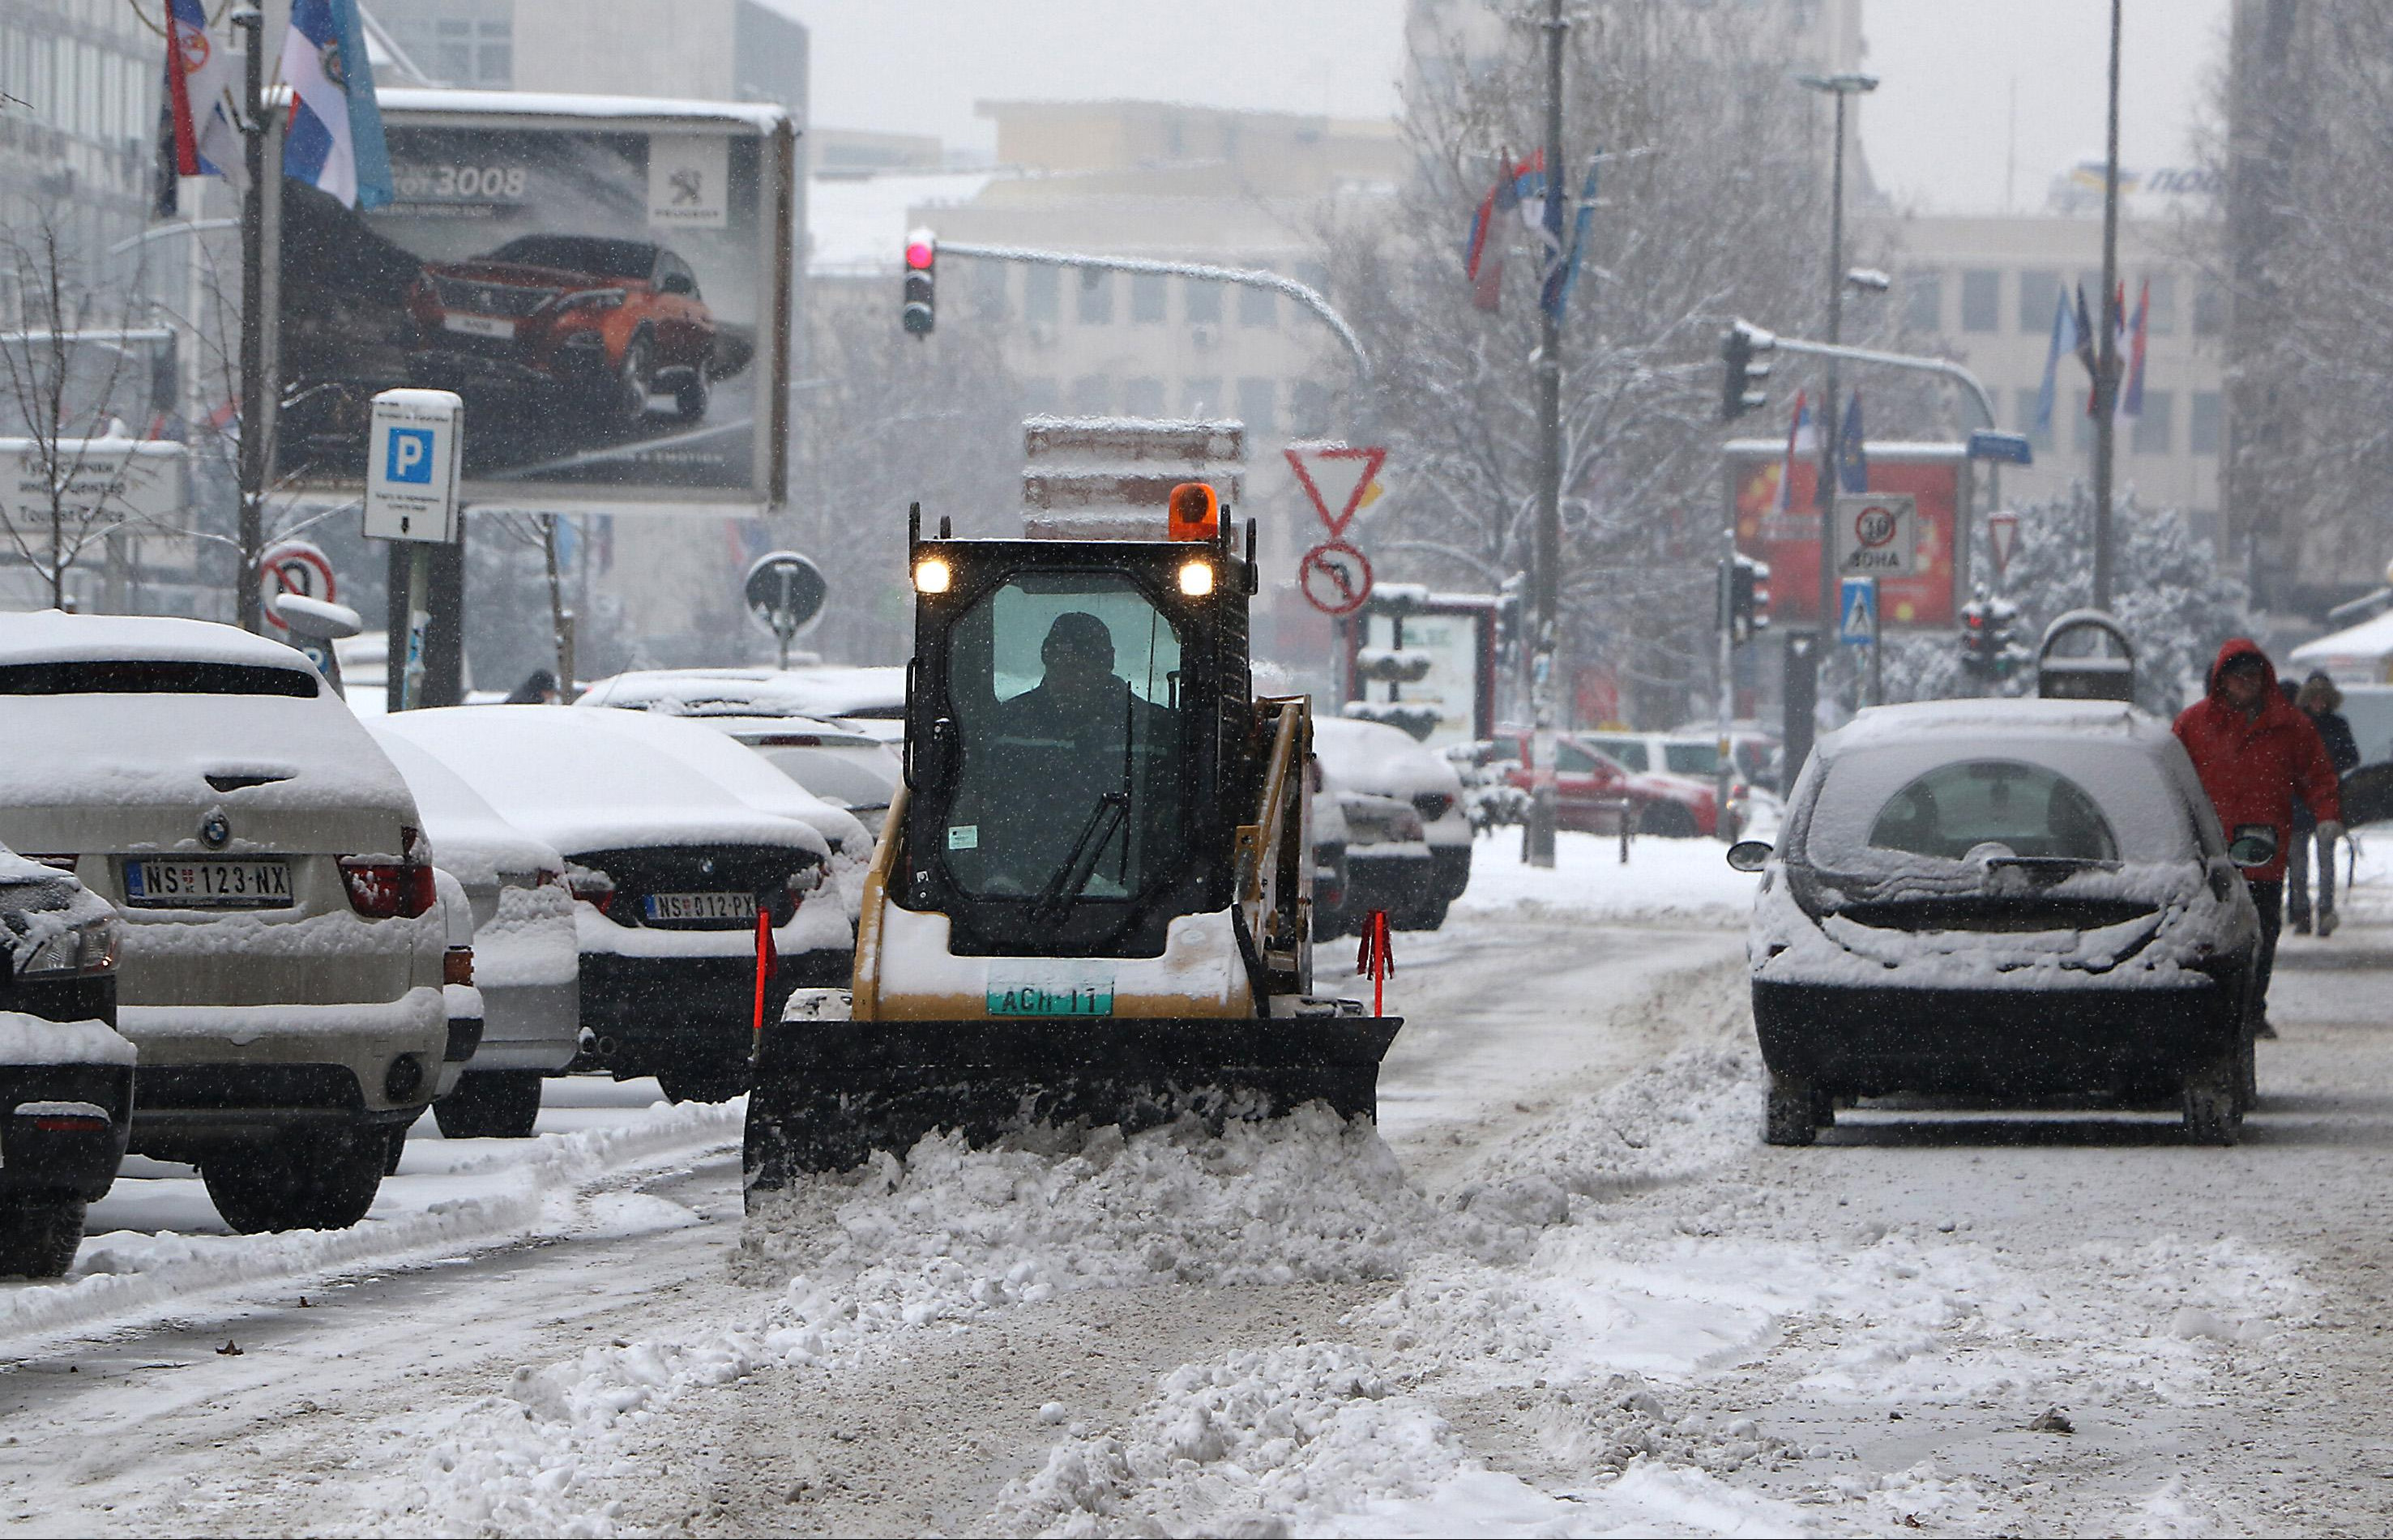 UPOZORENJE VOZAČIMA: Oprezno vozite zbog snežnih padavina!